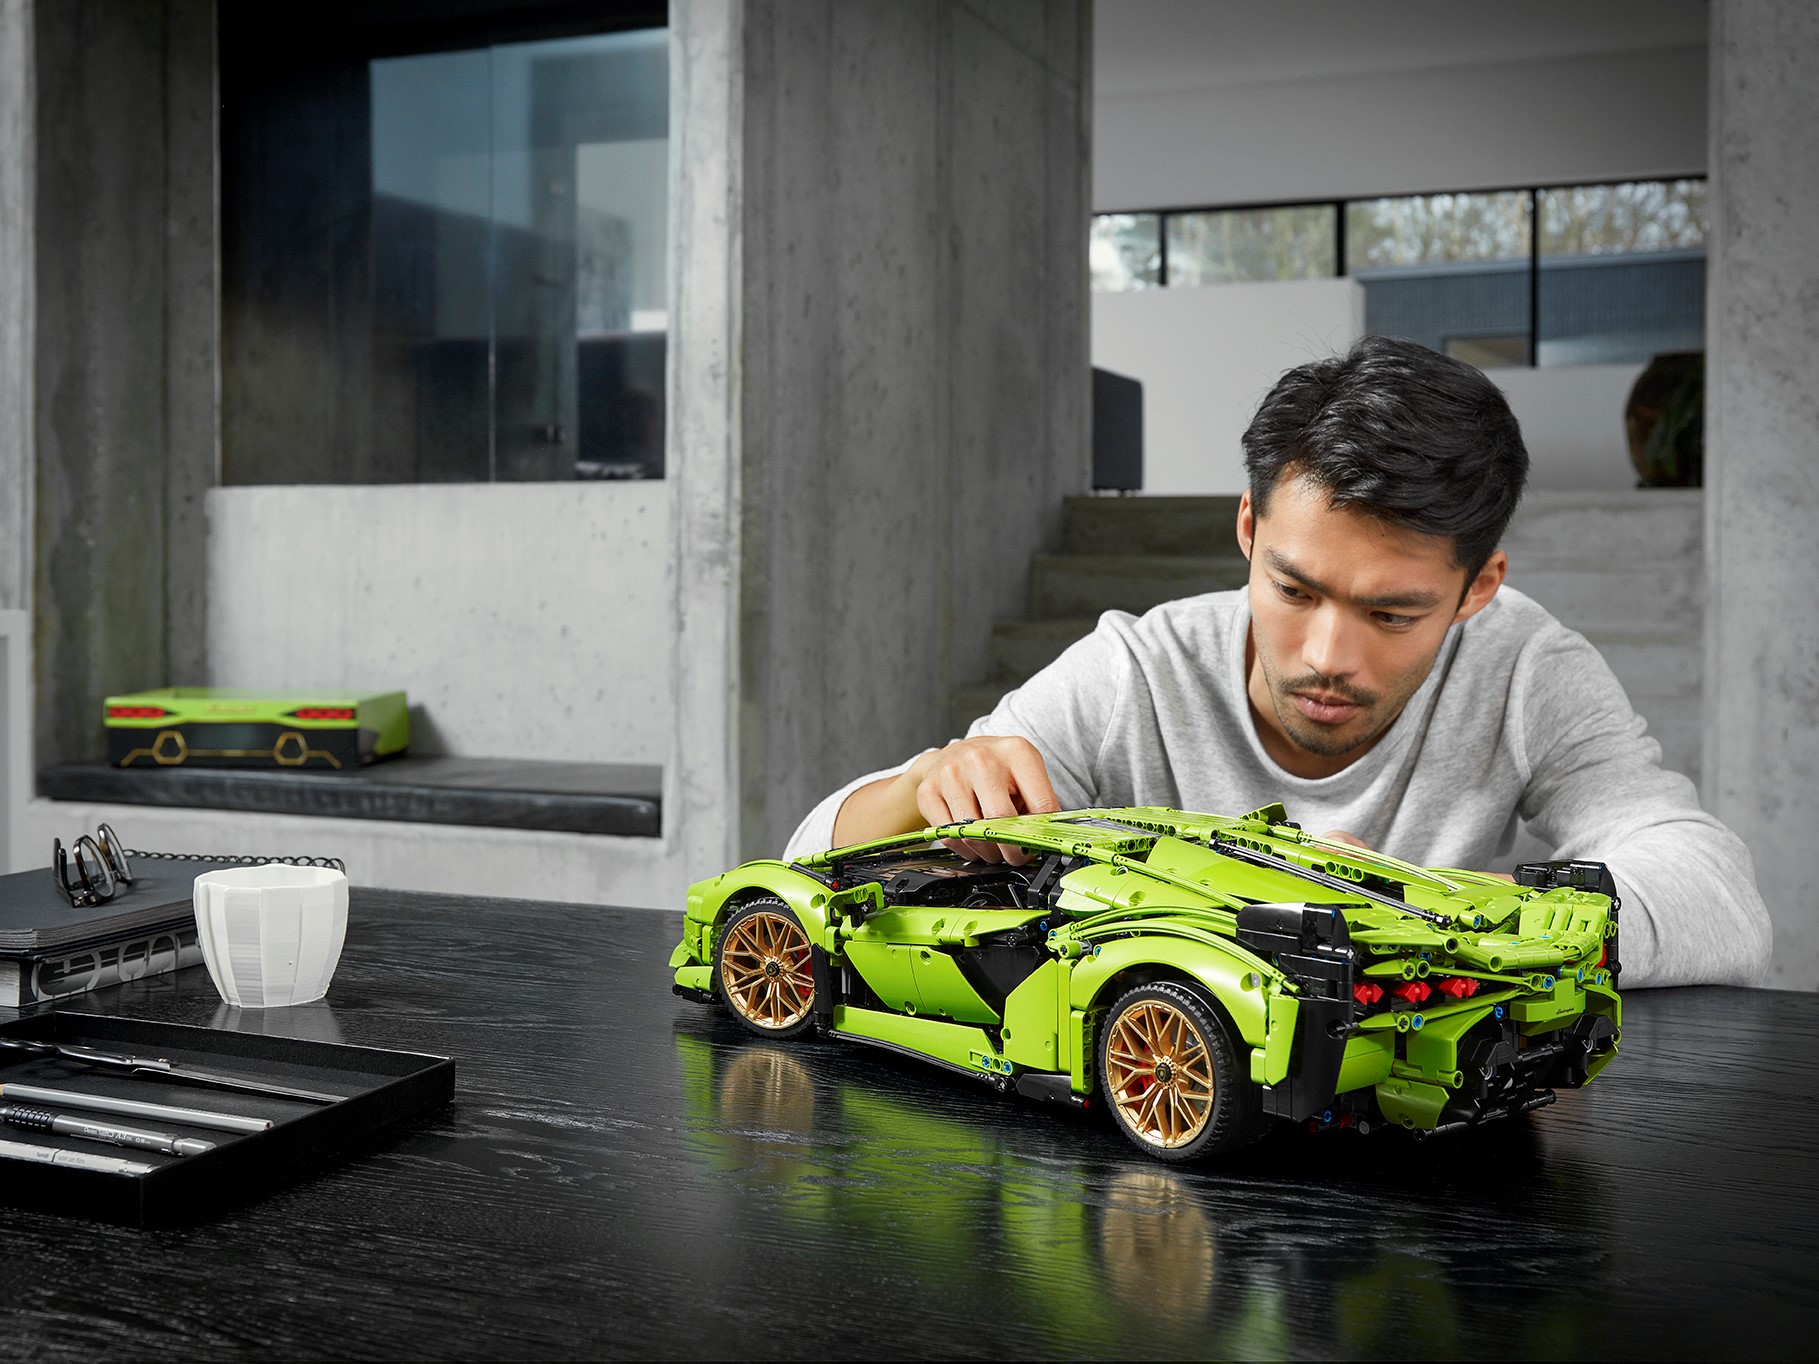 Lego brings out a $380, 3,969-piece Lamborghini Sián FKP 37 kit